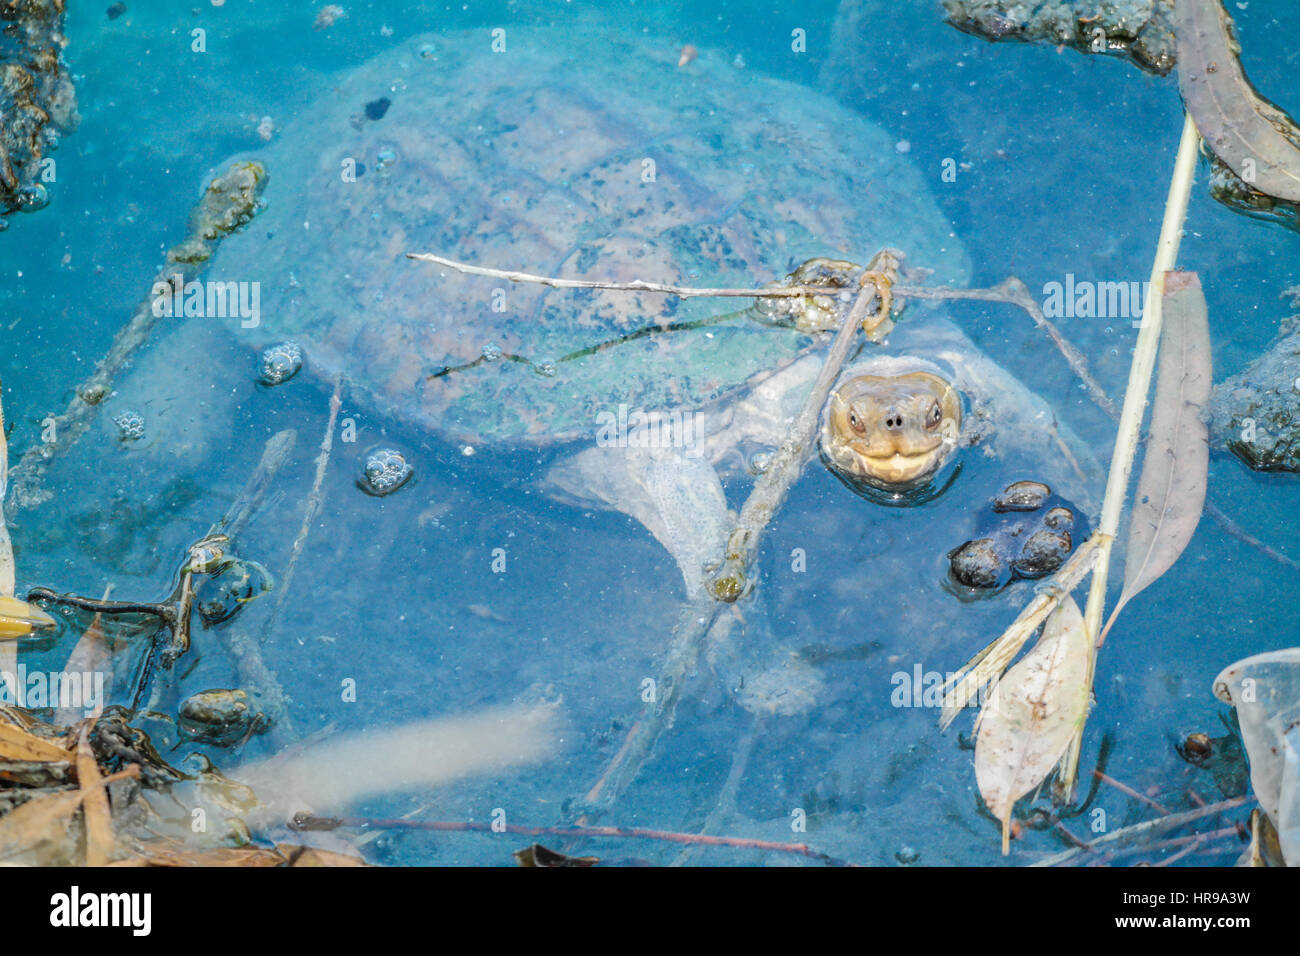 Cabeza de registrador en turquesa de tortugas bebé agua termal cerca. yavru deniz kaplumbagasi Foto de stock